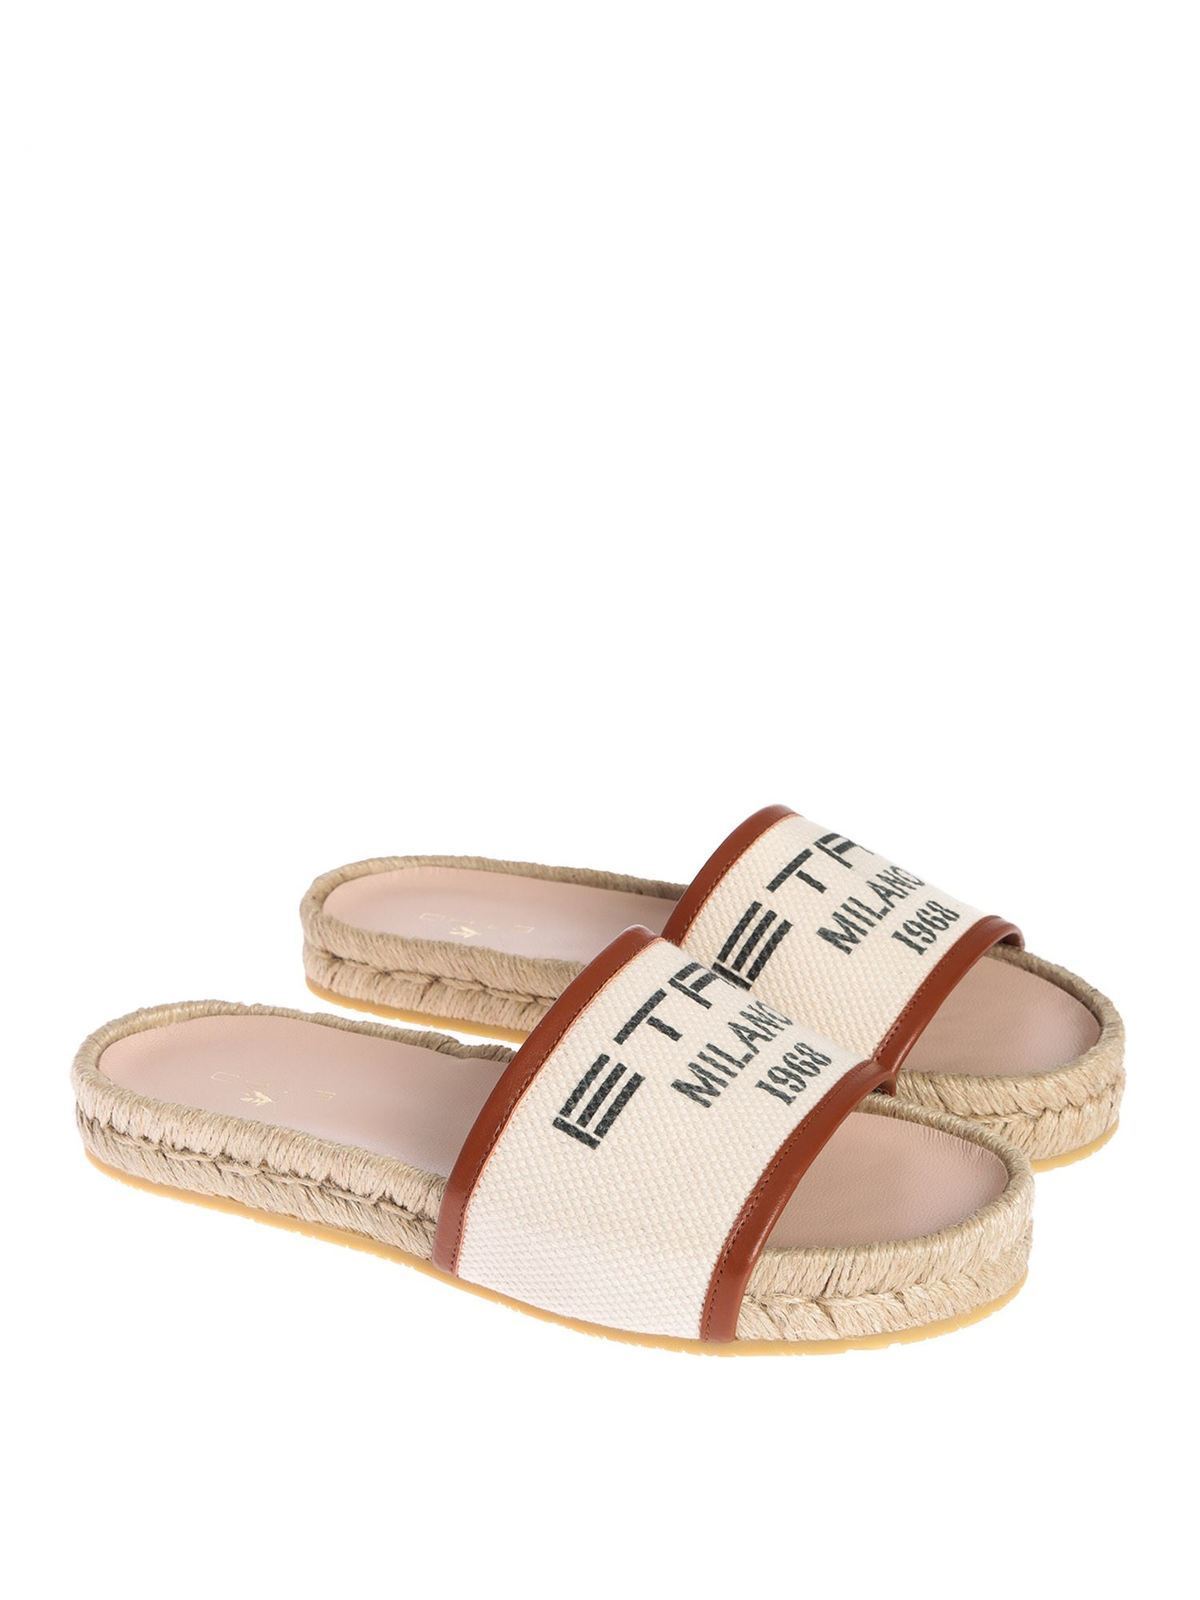 Etro Etro Milano 1968 sandals in white - 137433762800